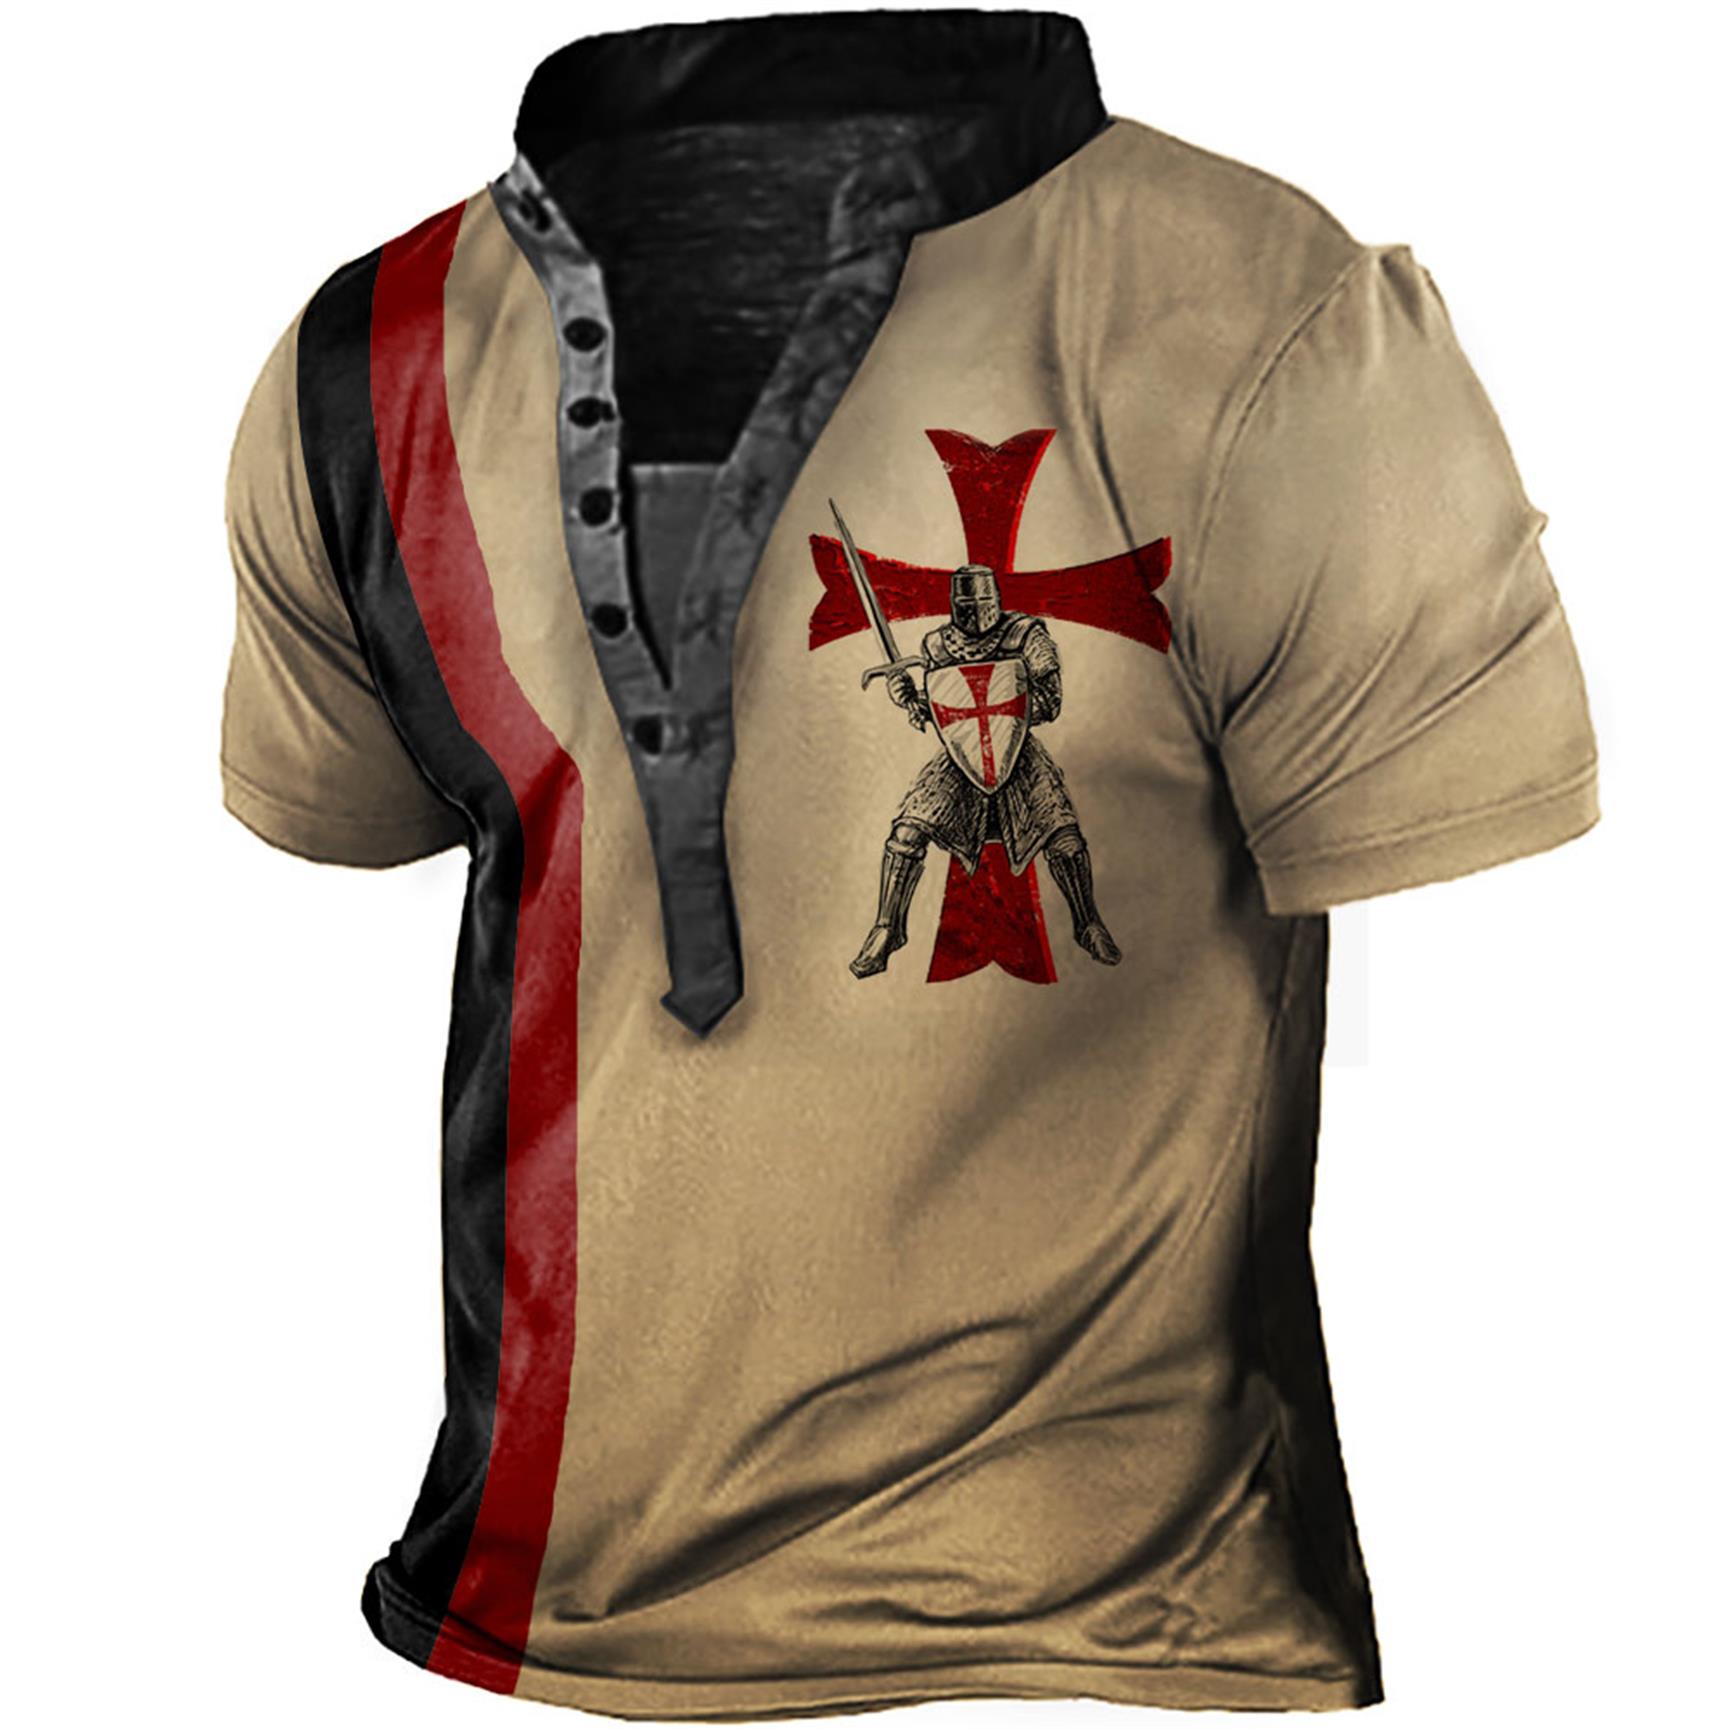 Men's Outdoor Knights Templar Chic Cross Stripe Print Henley T-shirt